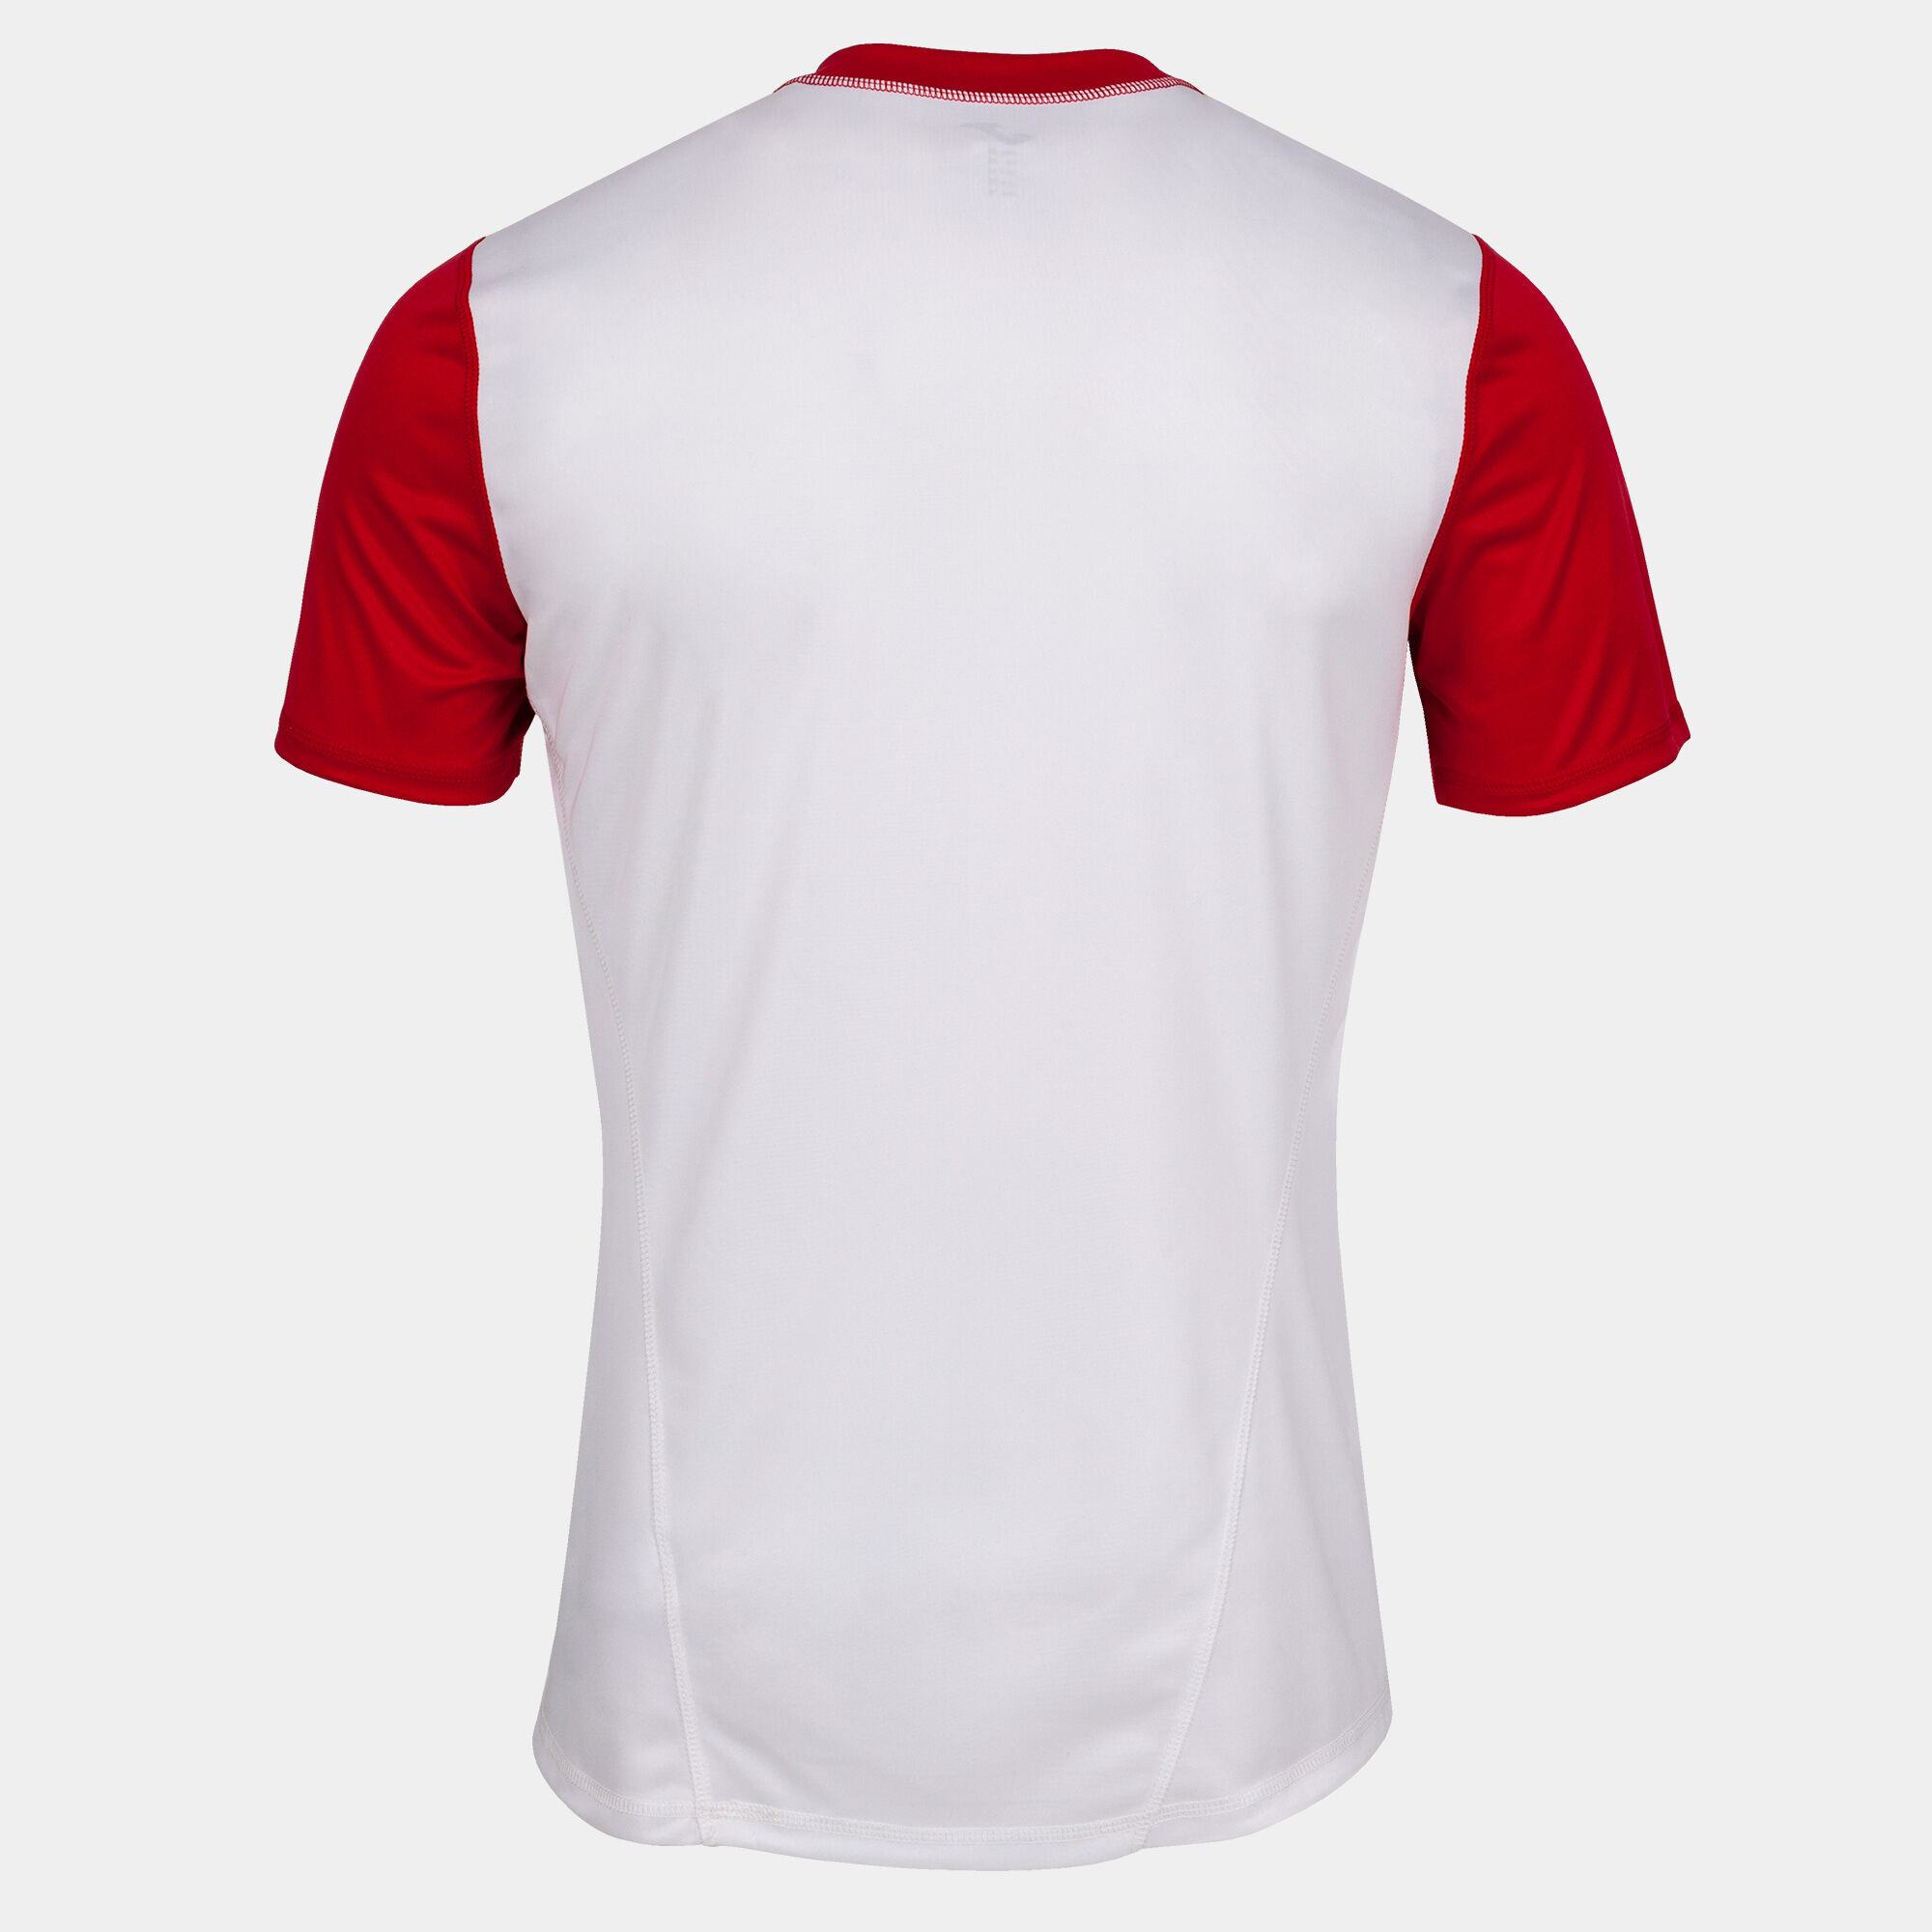 Camiseta manga corta hombre Hispa IV blanco rojo